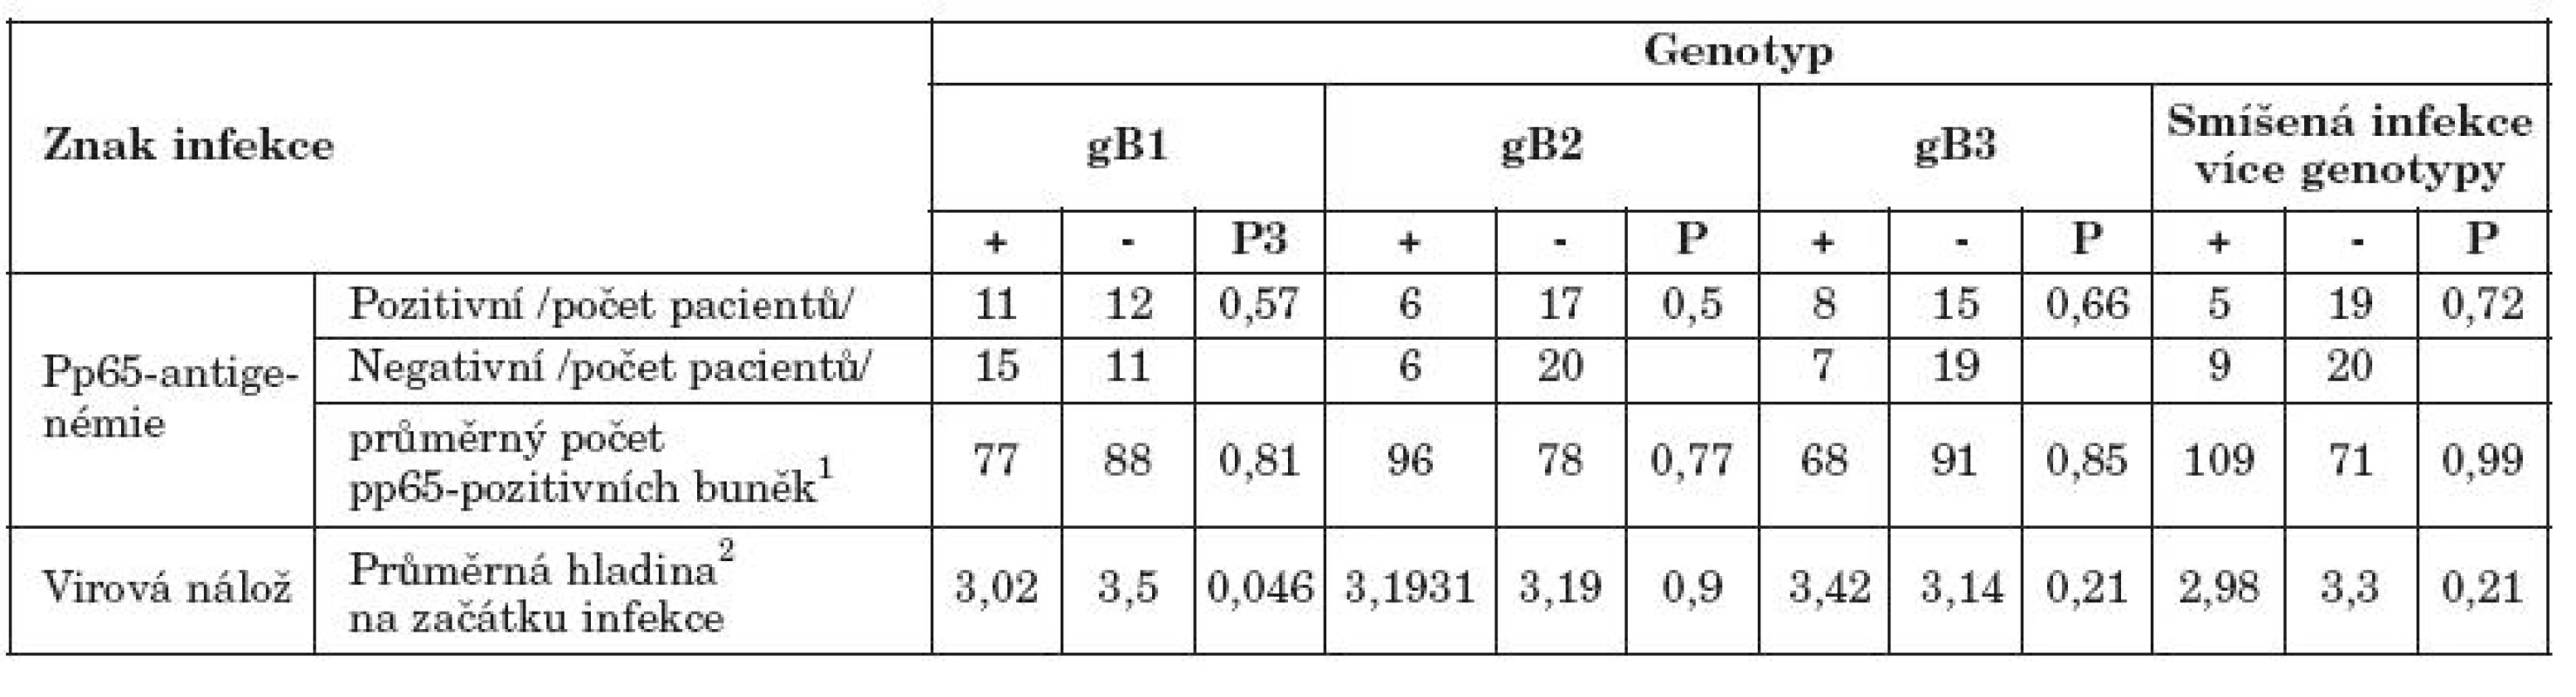 Charakteristiky cytomegalovirové infekce u pacientů s různými genotypy gB

Table 4. Characteristics of CMV infection in the patients with various gB genotypes